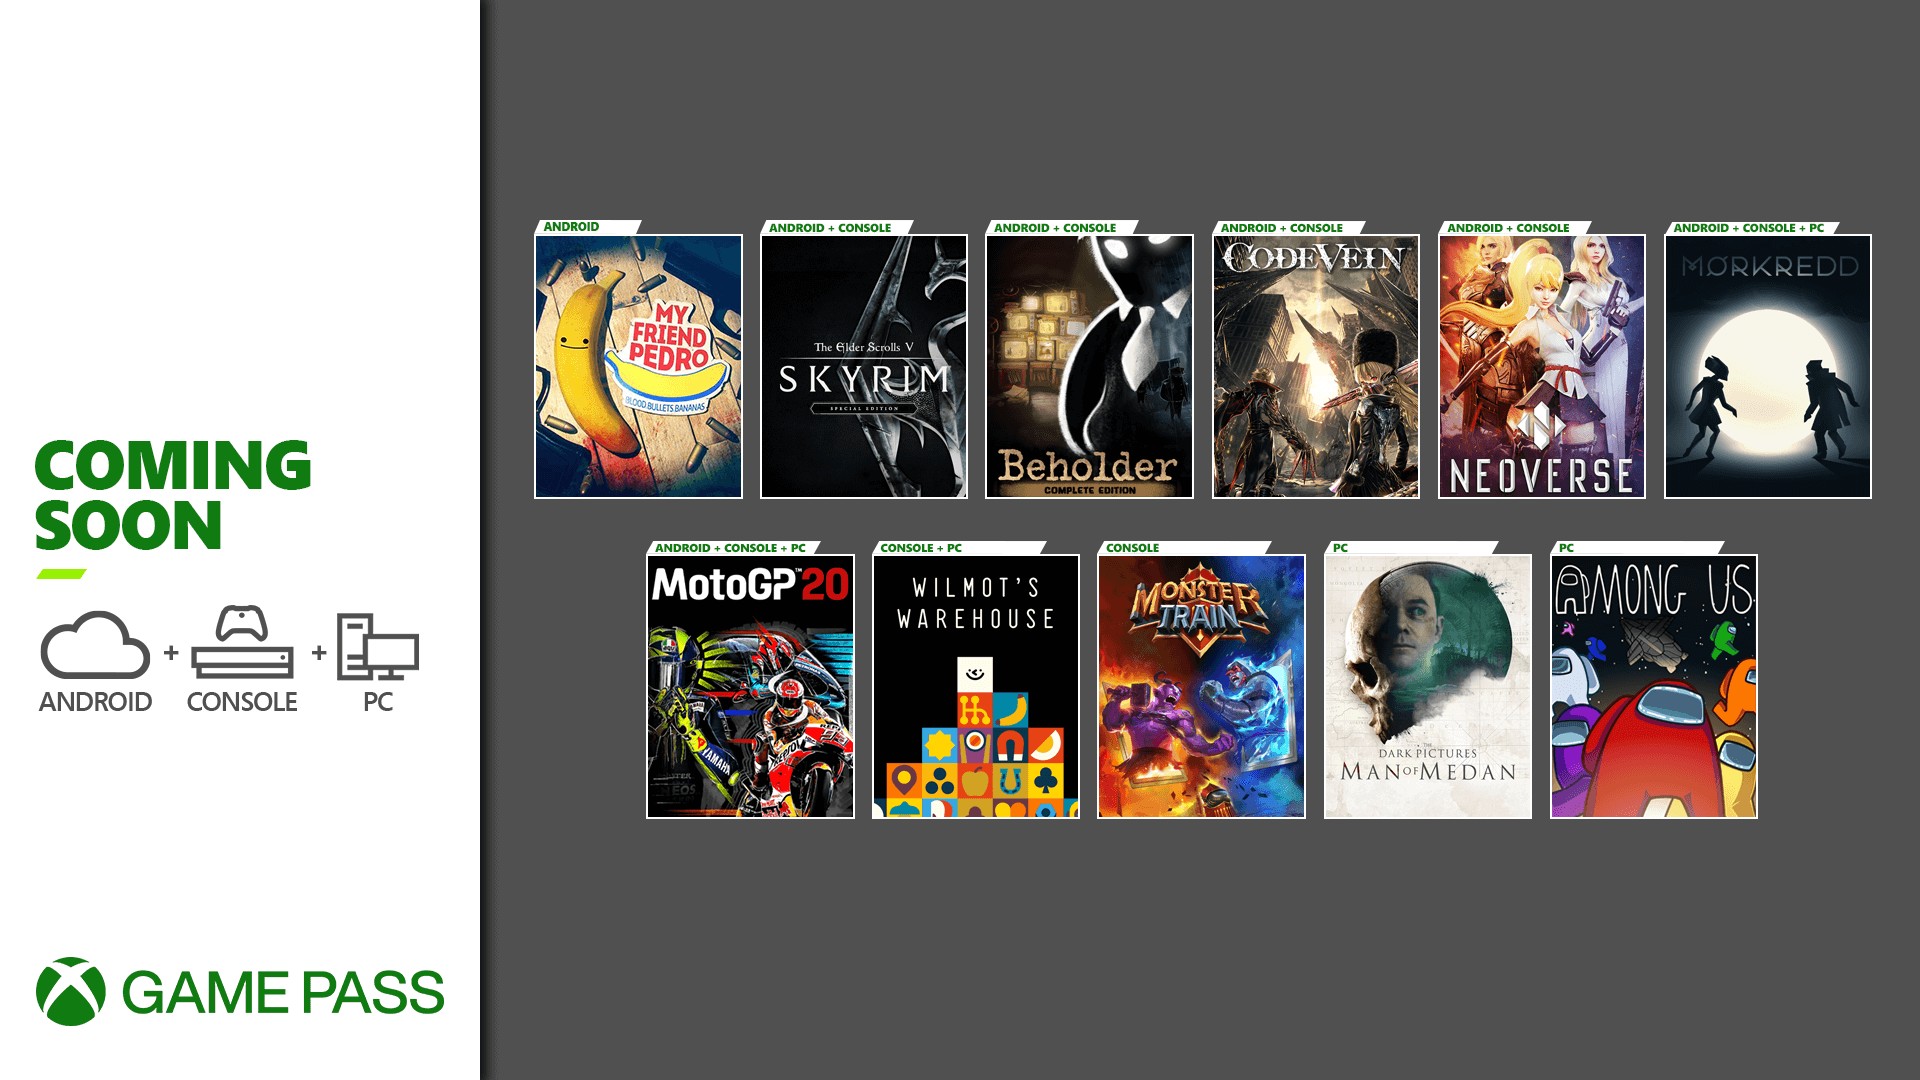 Xbox Game Pass: confira os jogos que chegam ao serviço no início de novembro  - GameBlast